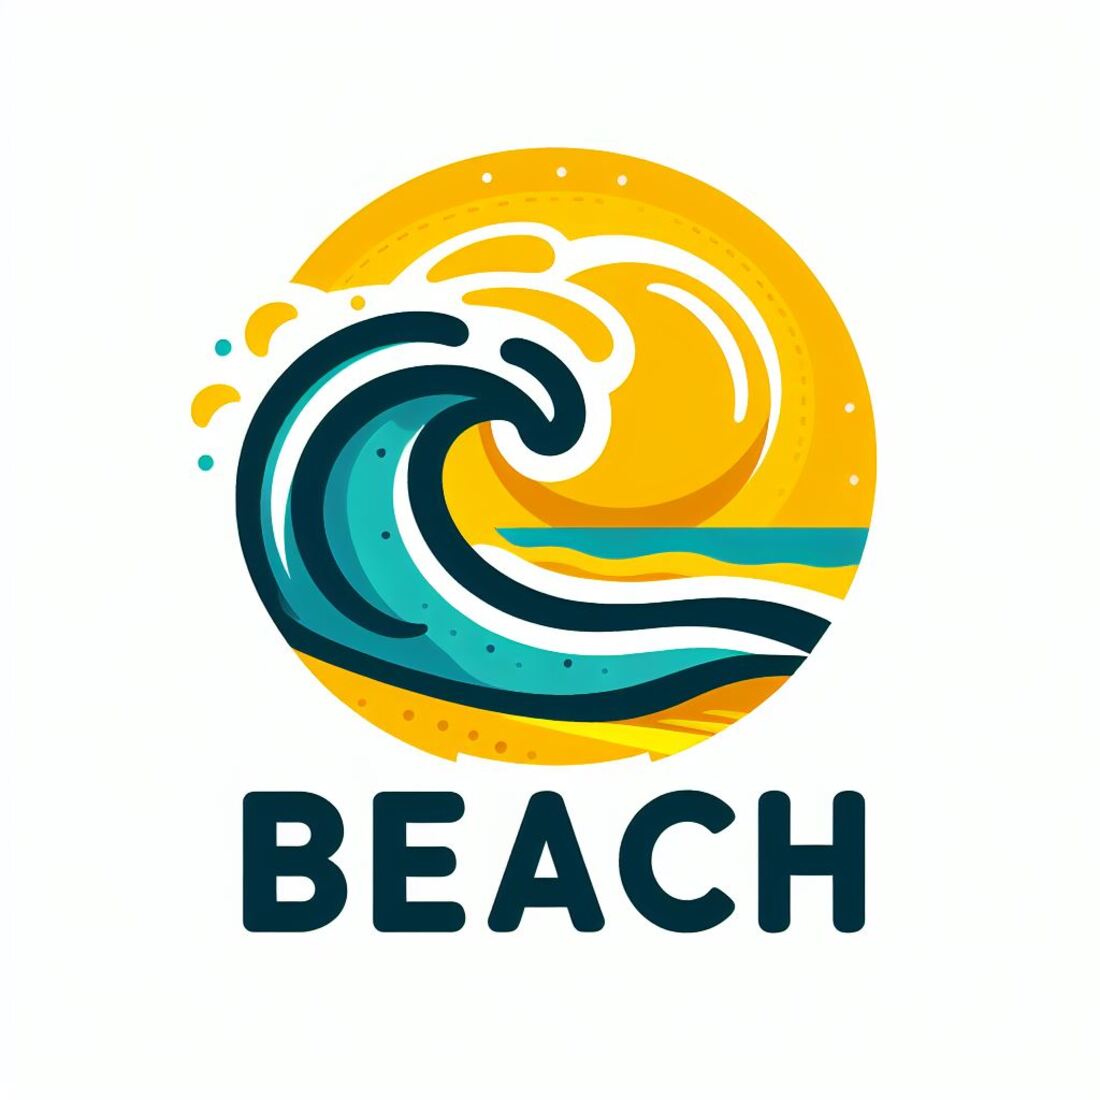 Minimal beach logo design preview image.